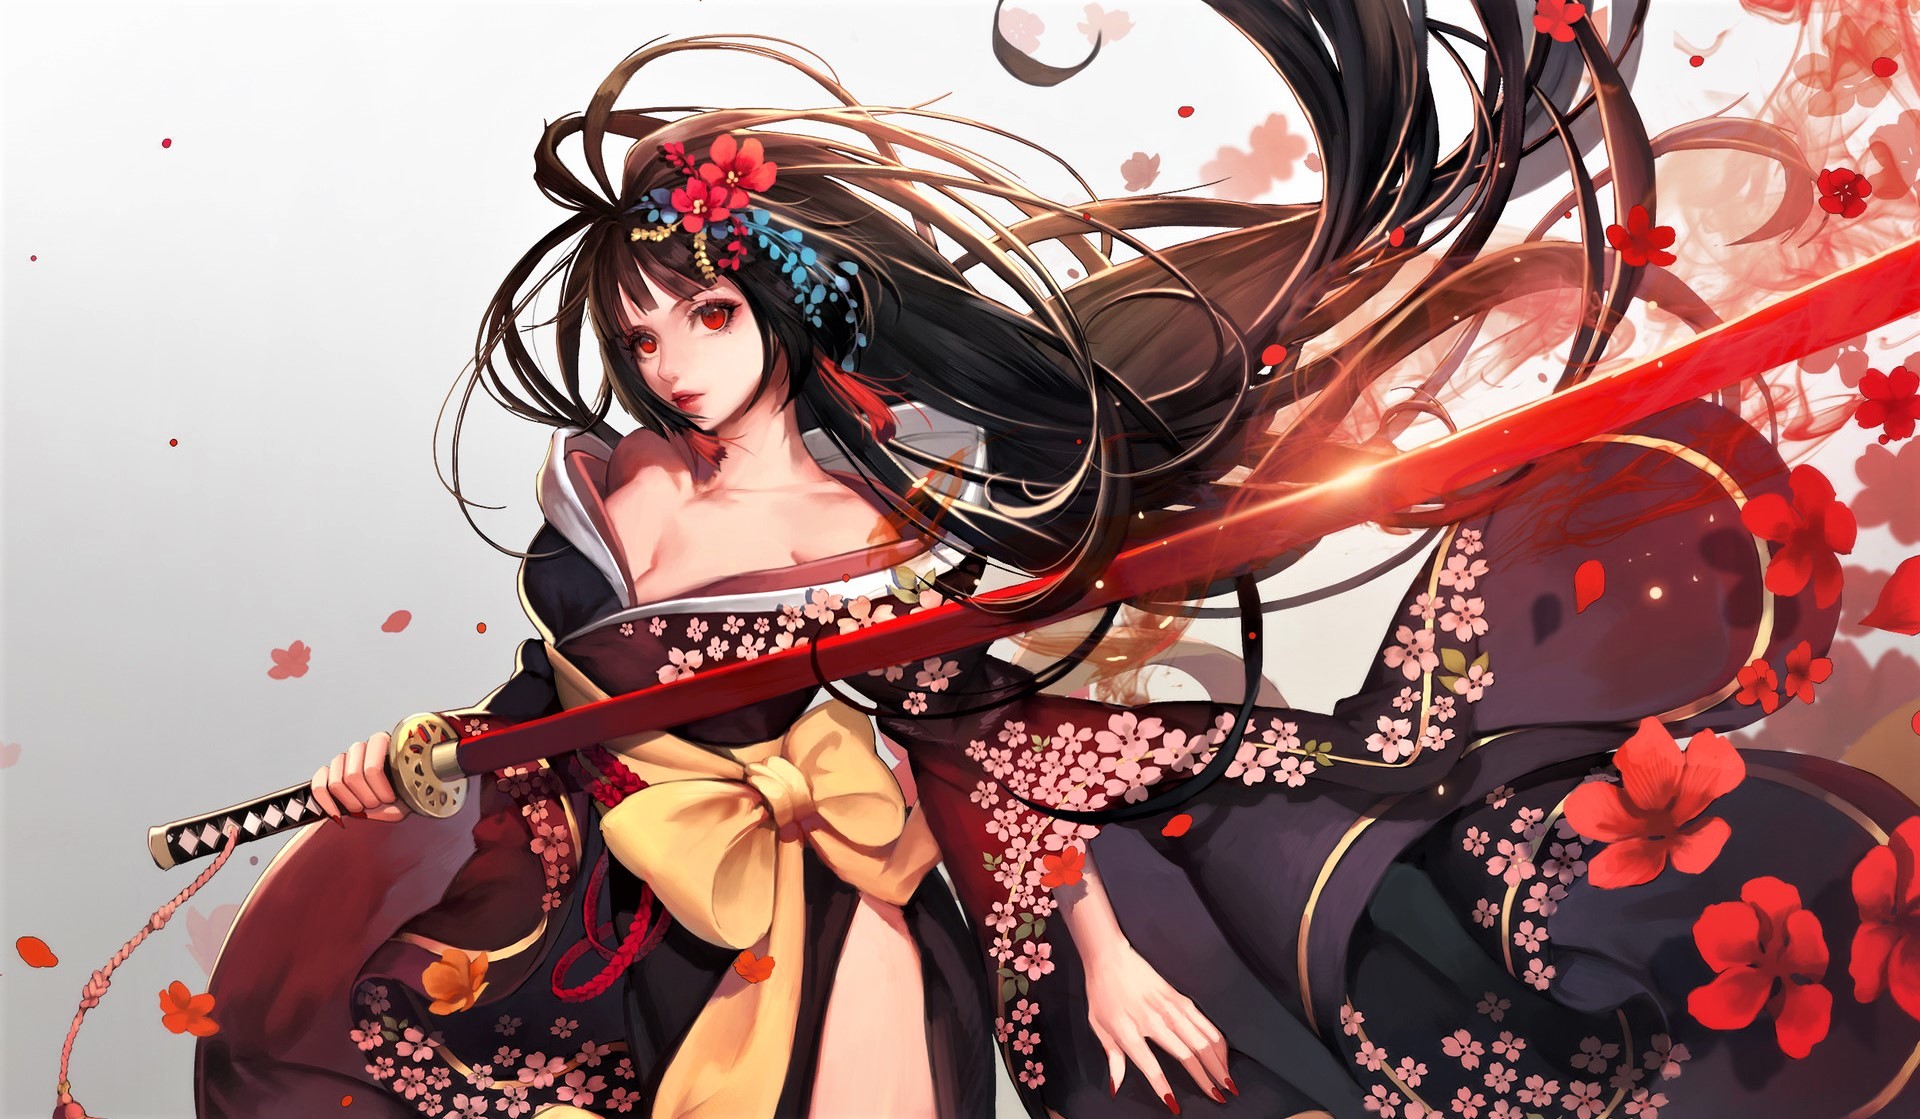 Anime Katana Warrior Girl - Finished Projects - Blender Artists Community